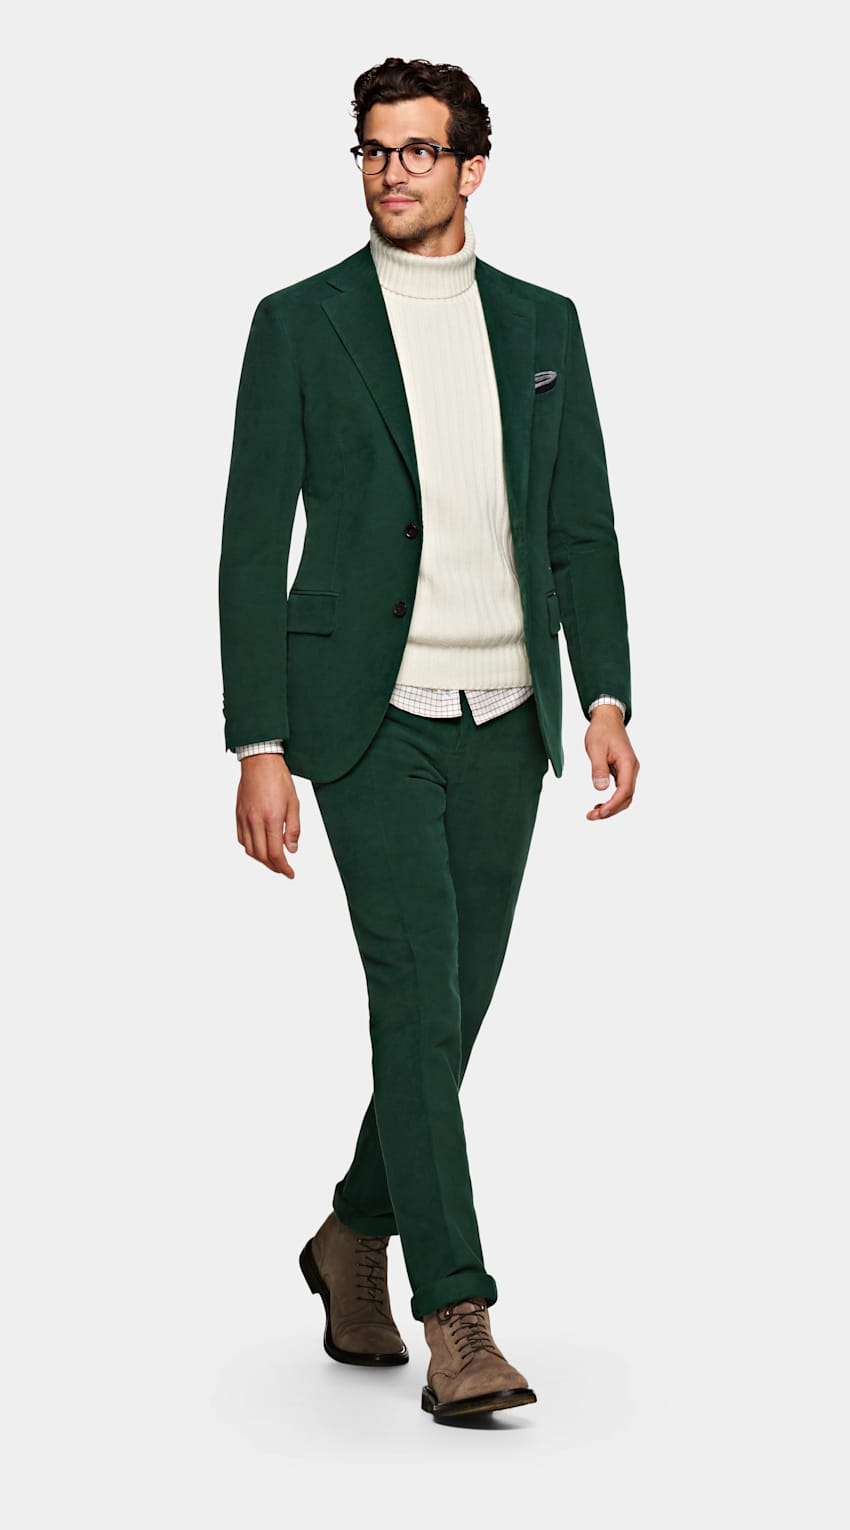 SUITSUPPLY 英国 Brisbane Moss 生产的面料 Jort Green Suit